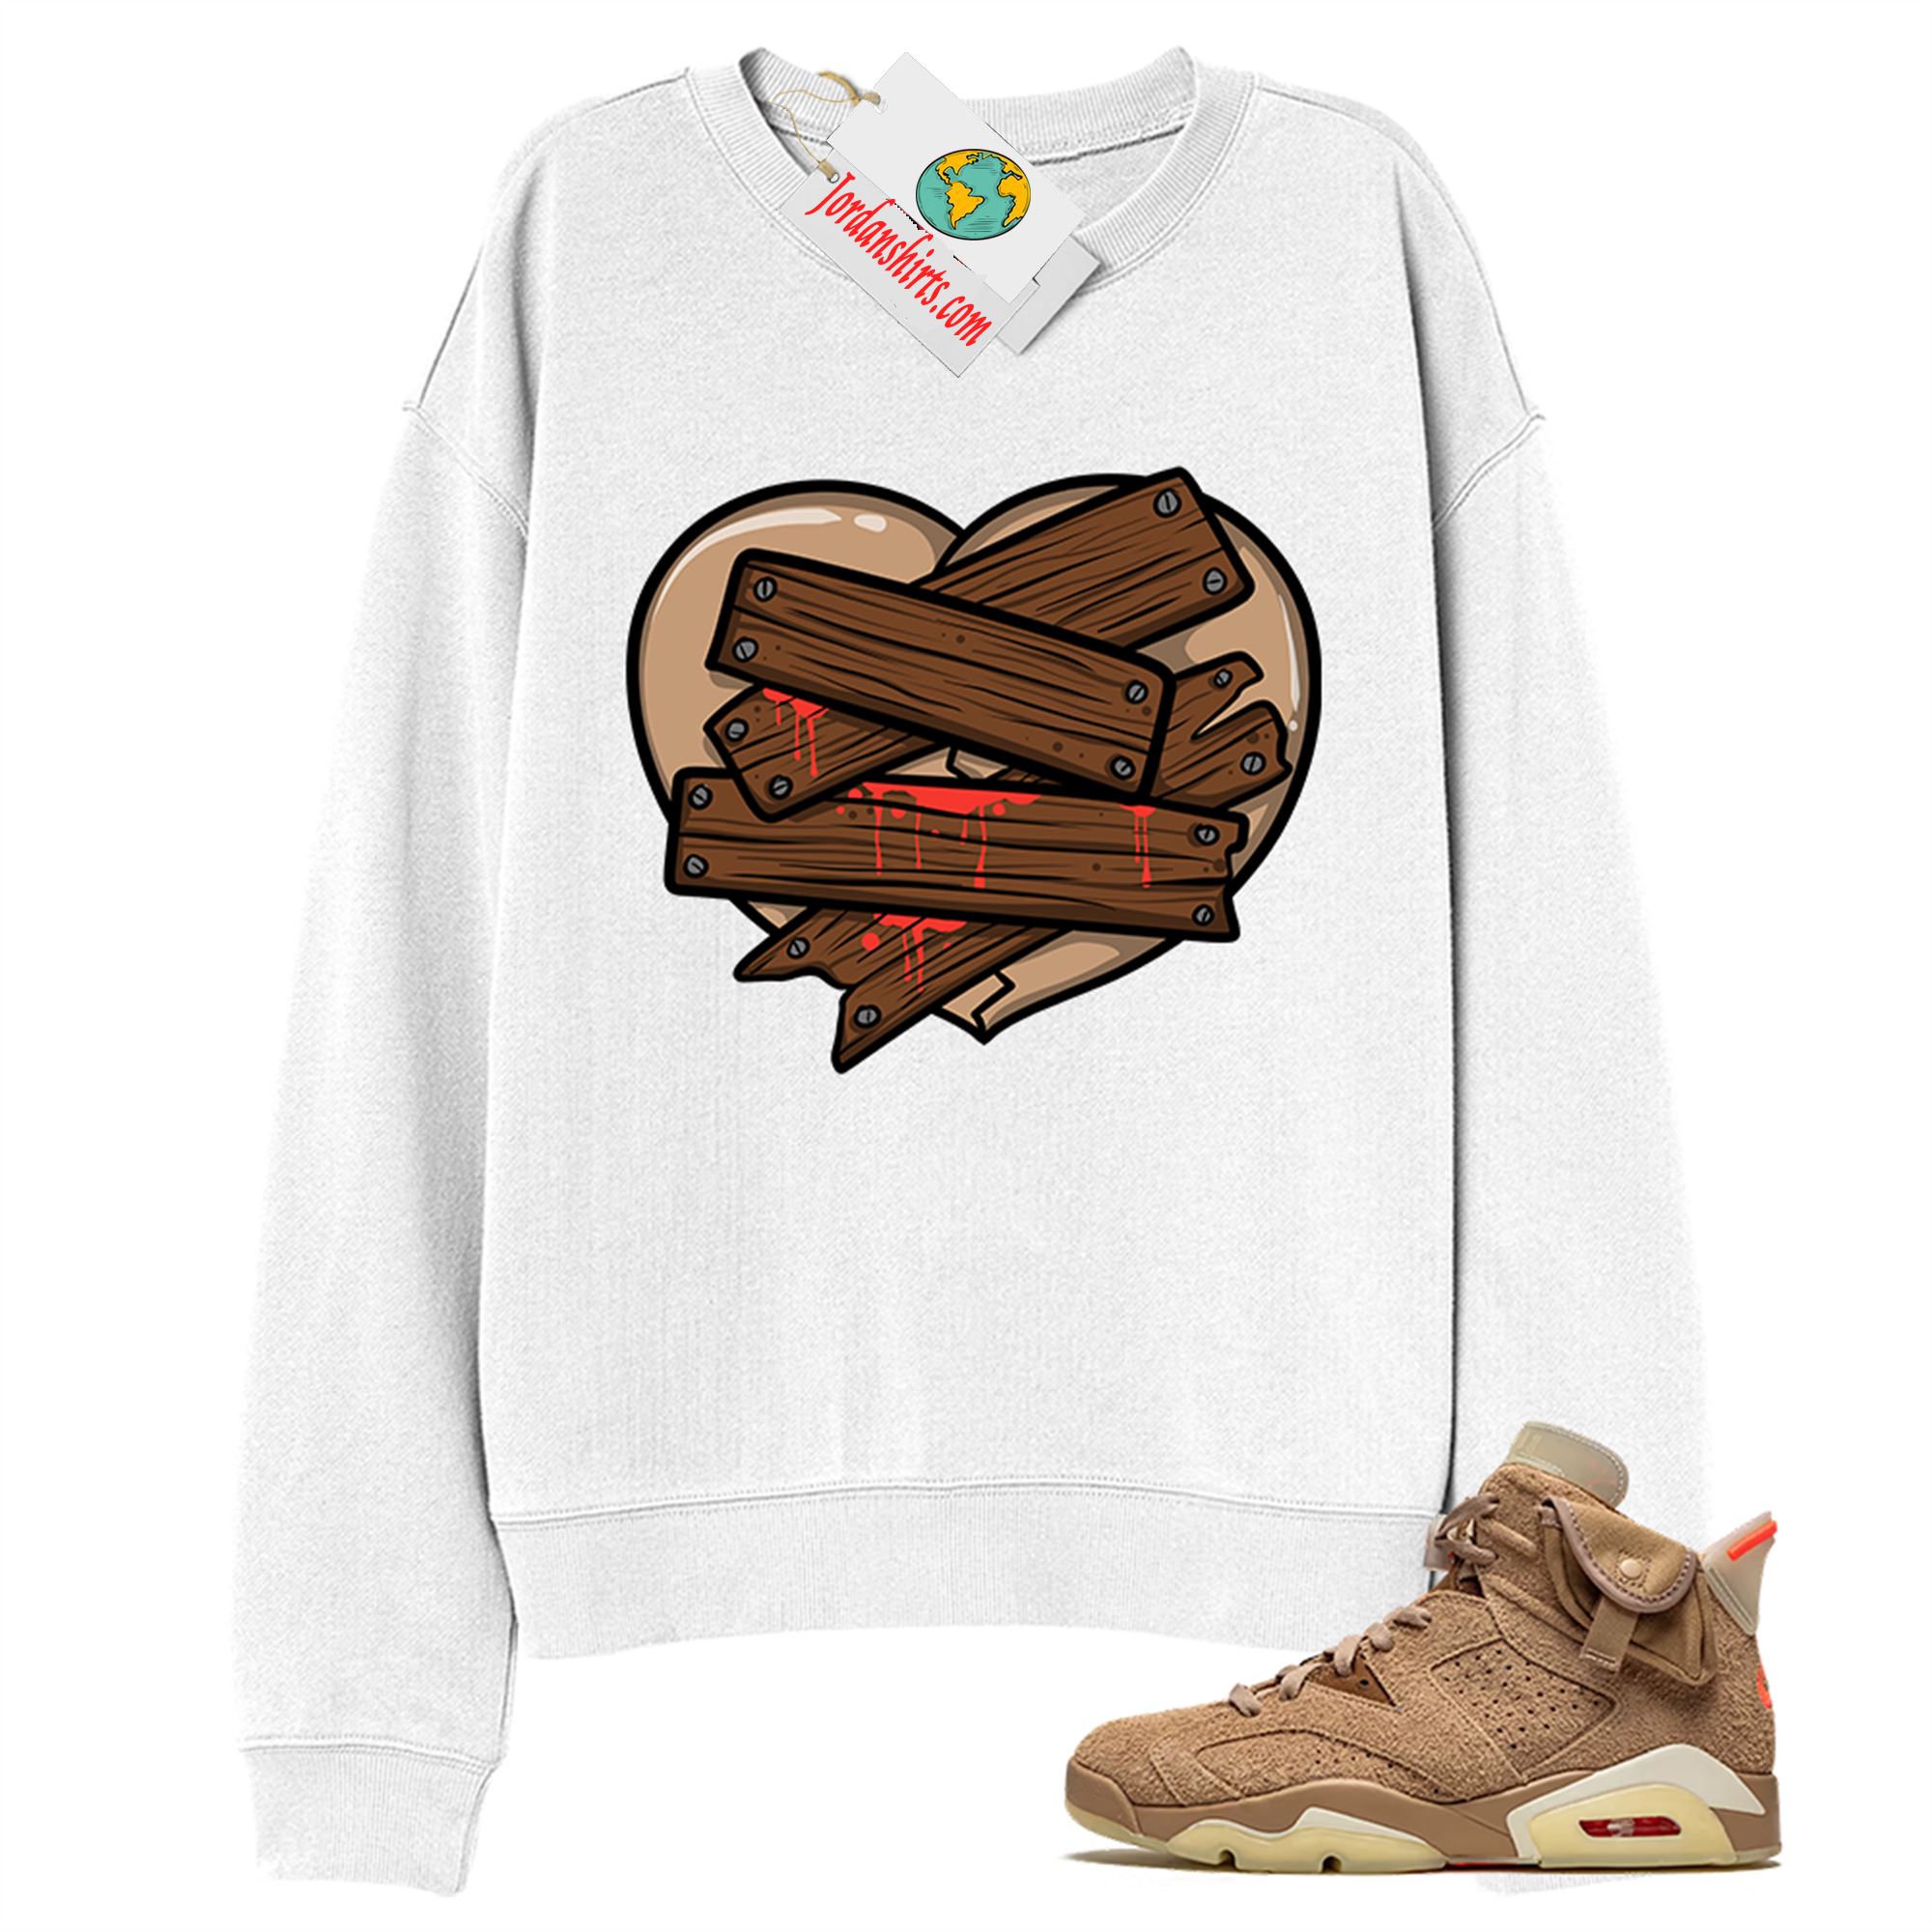 Jordan 6 Sweatshirt, Patch Love Broken Heart White Sweatshirt Air Jordan 6 Travis Scott 6s Plus Size Up To 5xl